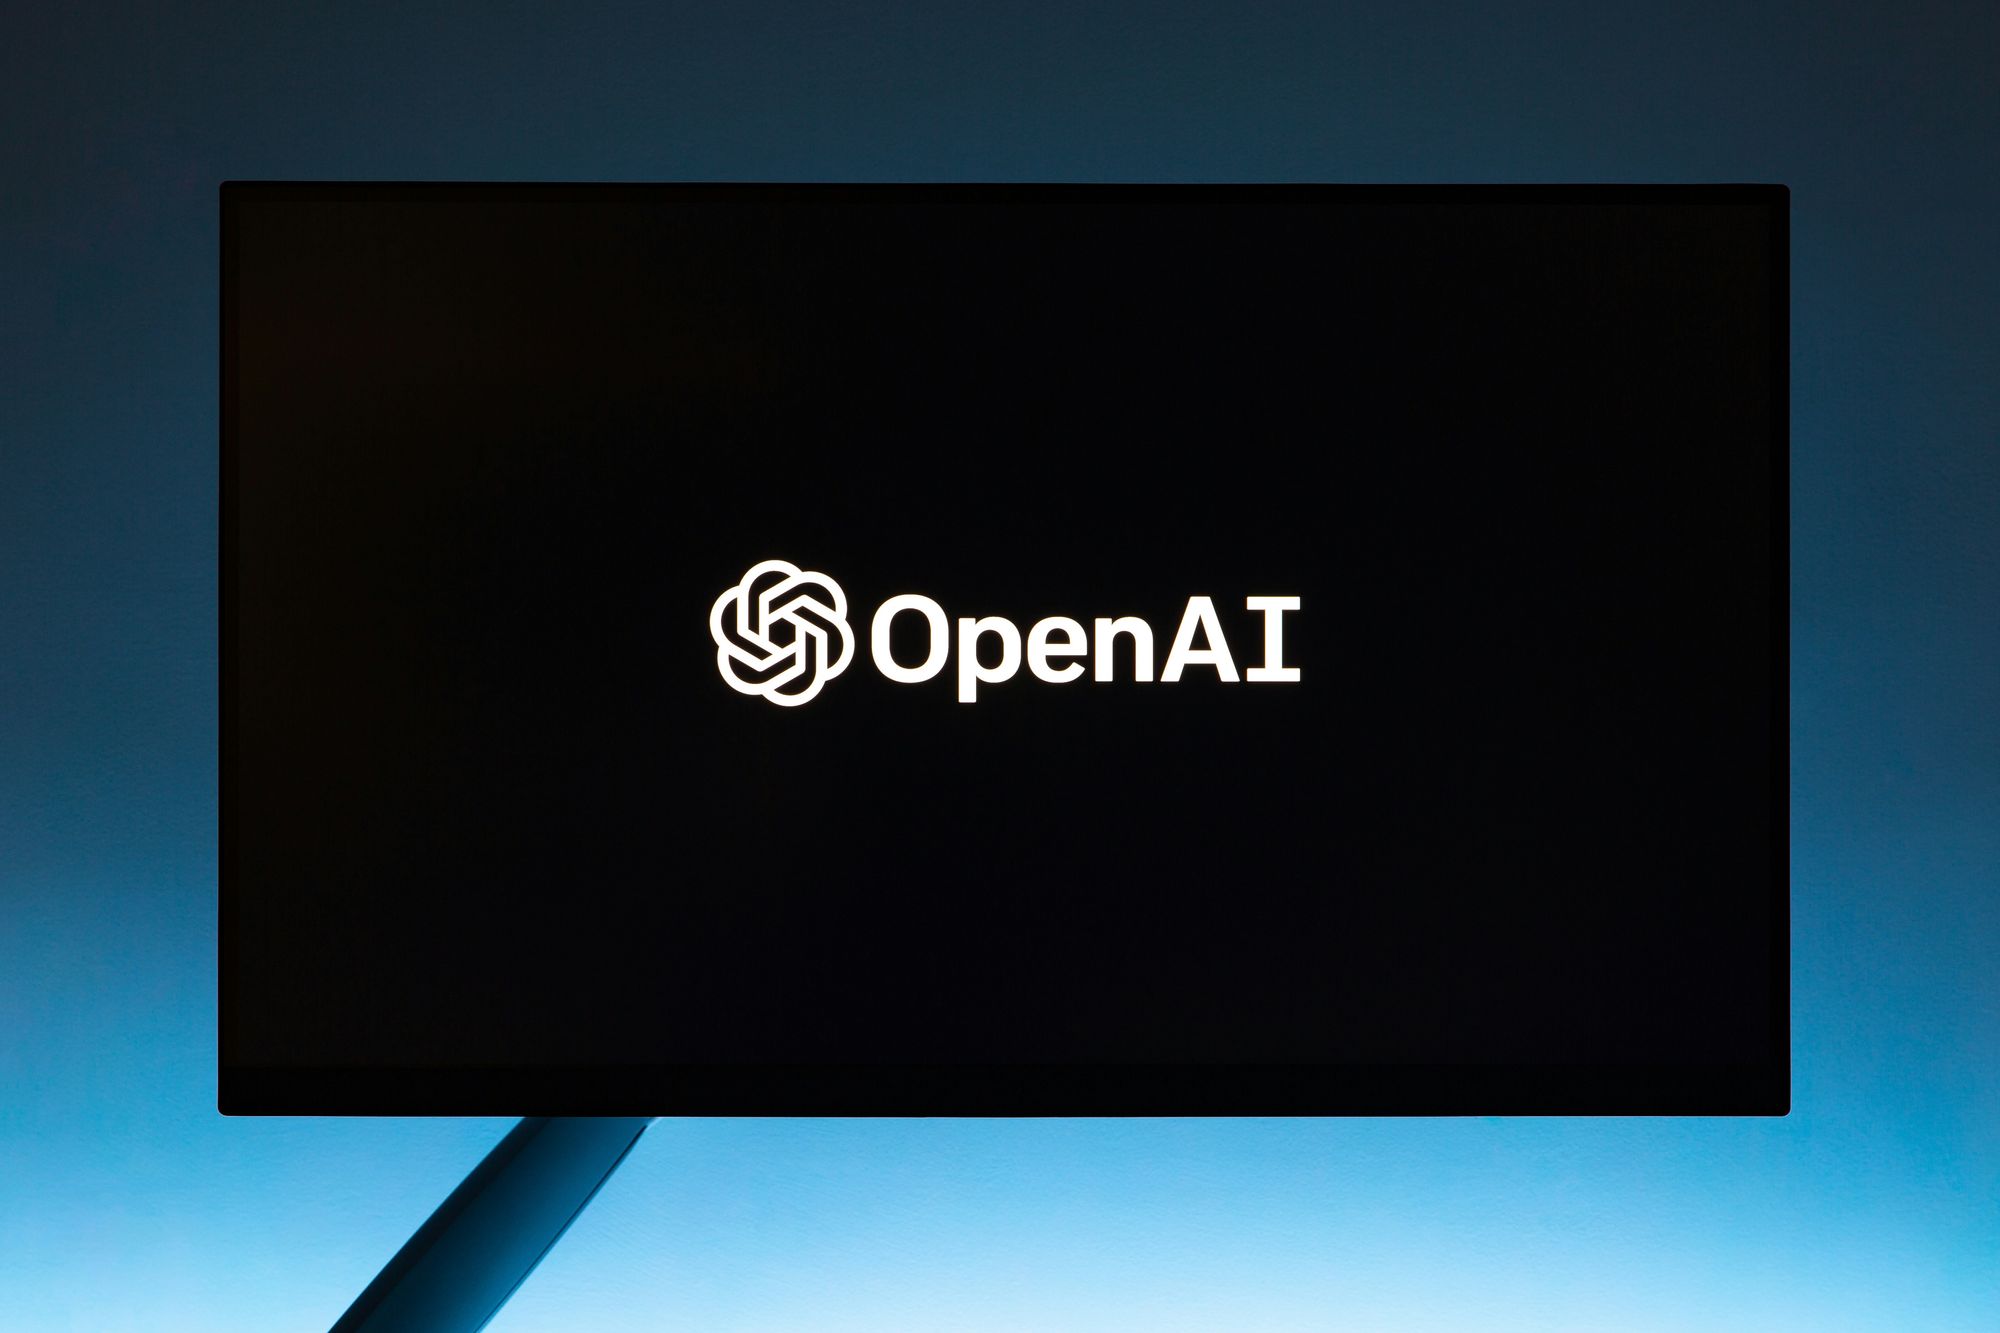 OpenAI logo in white with black background for OpenAI Text To Speech